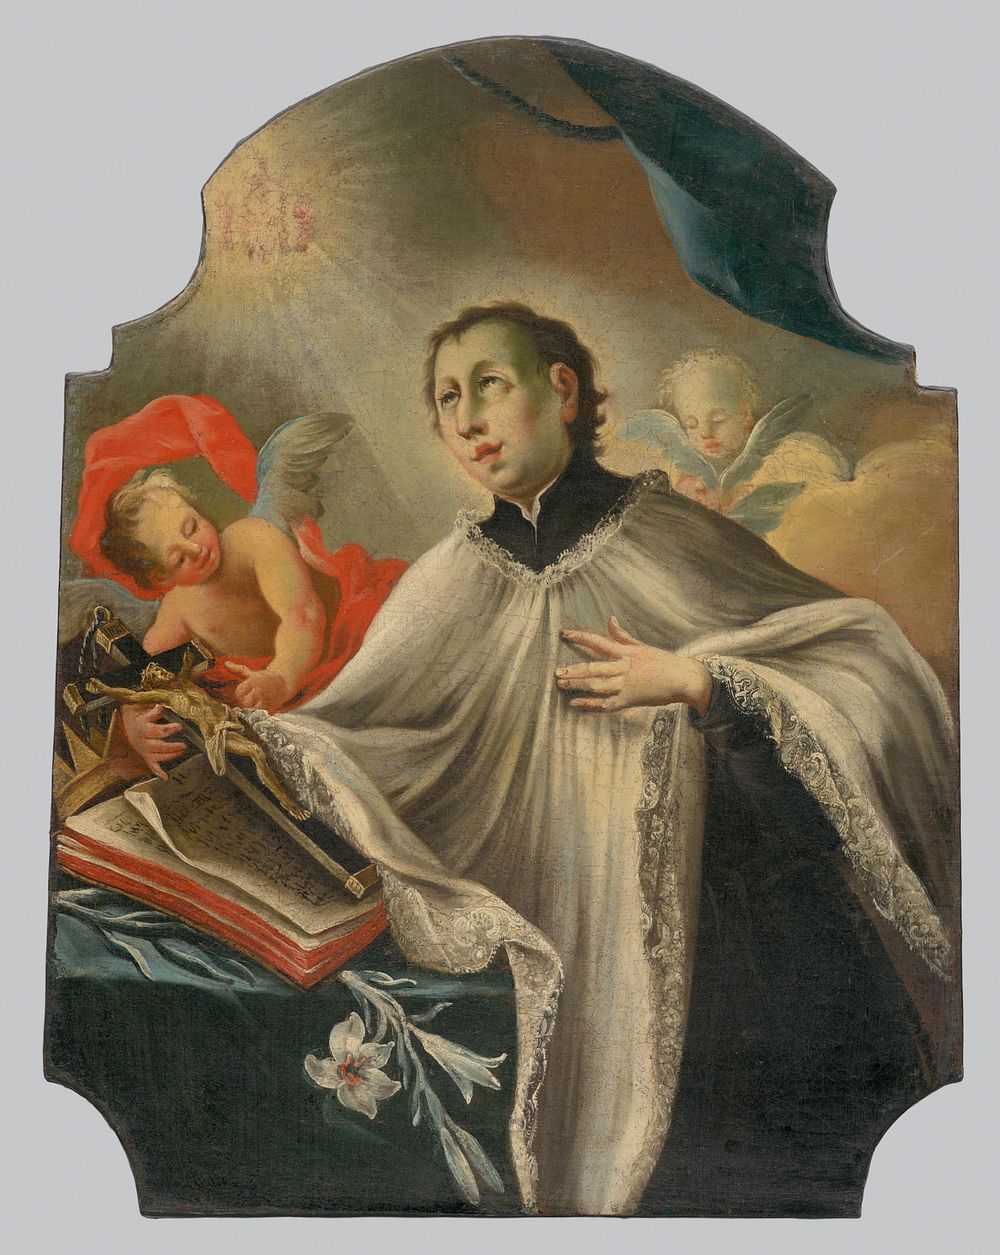 Saint aloysius